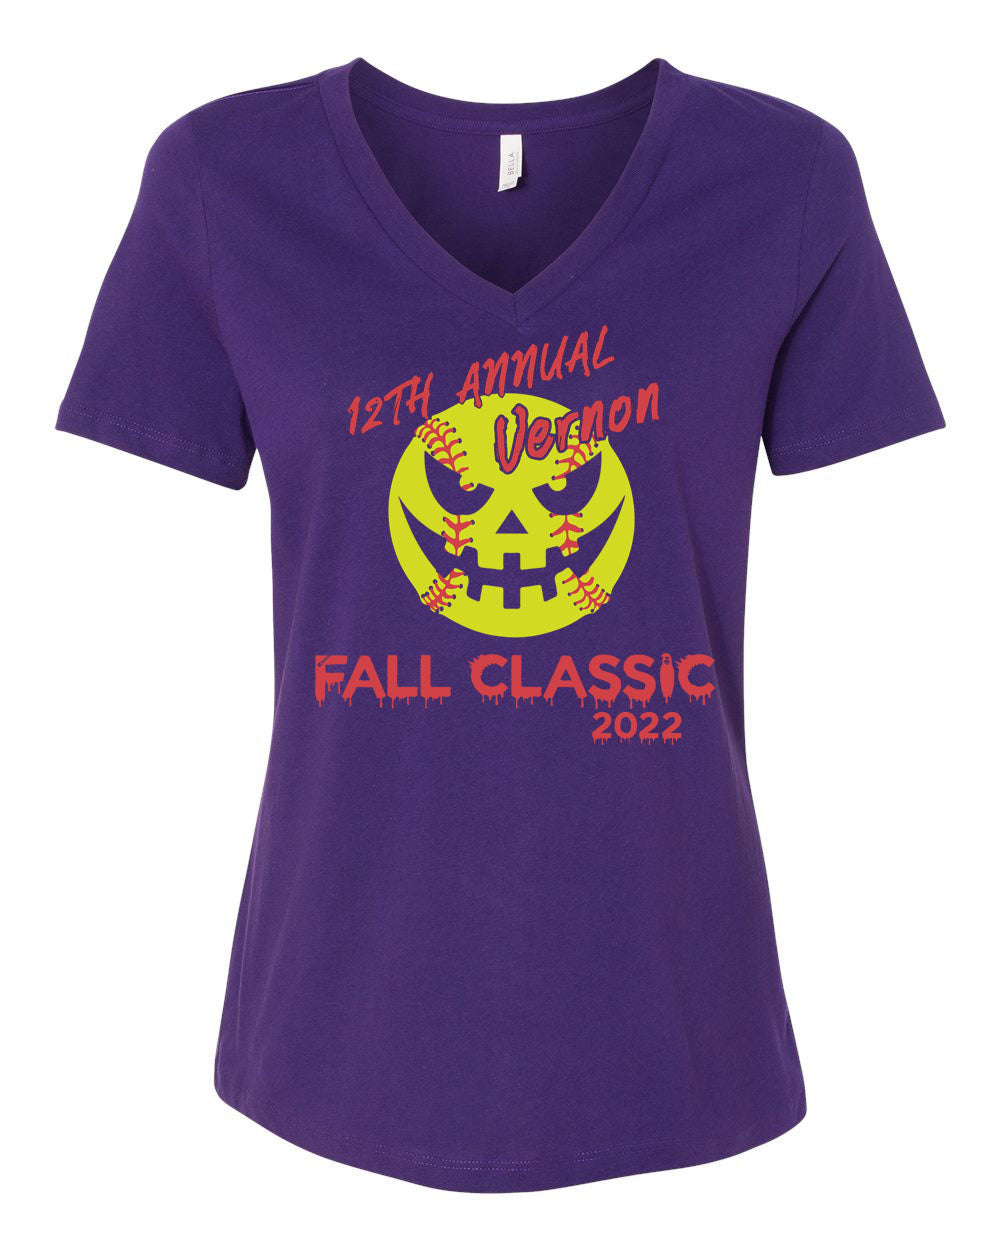 Fall classic V-neck T-shirt